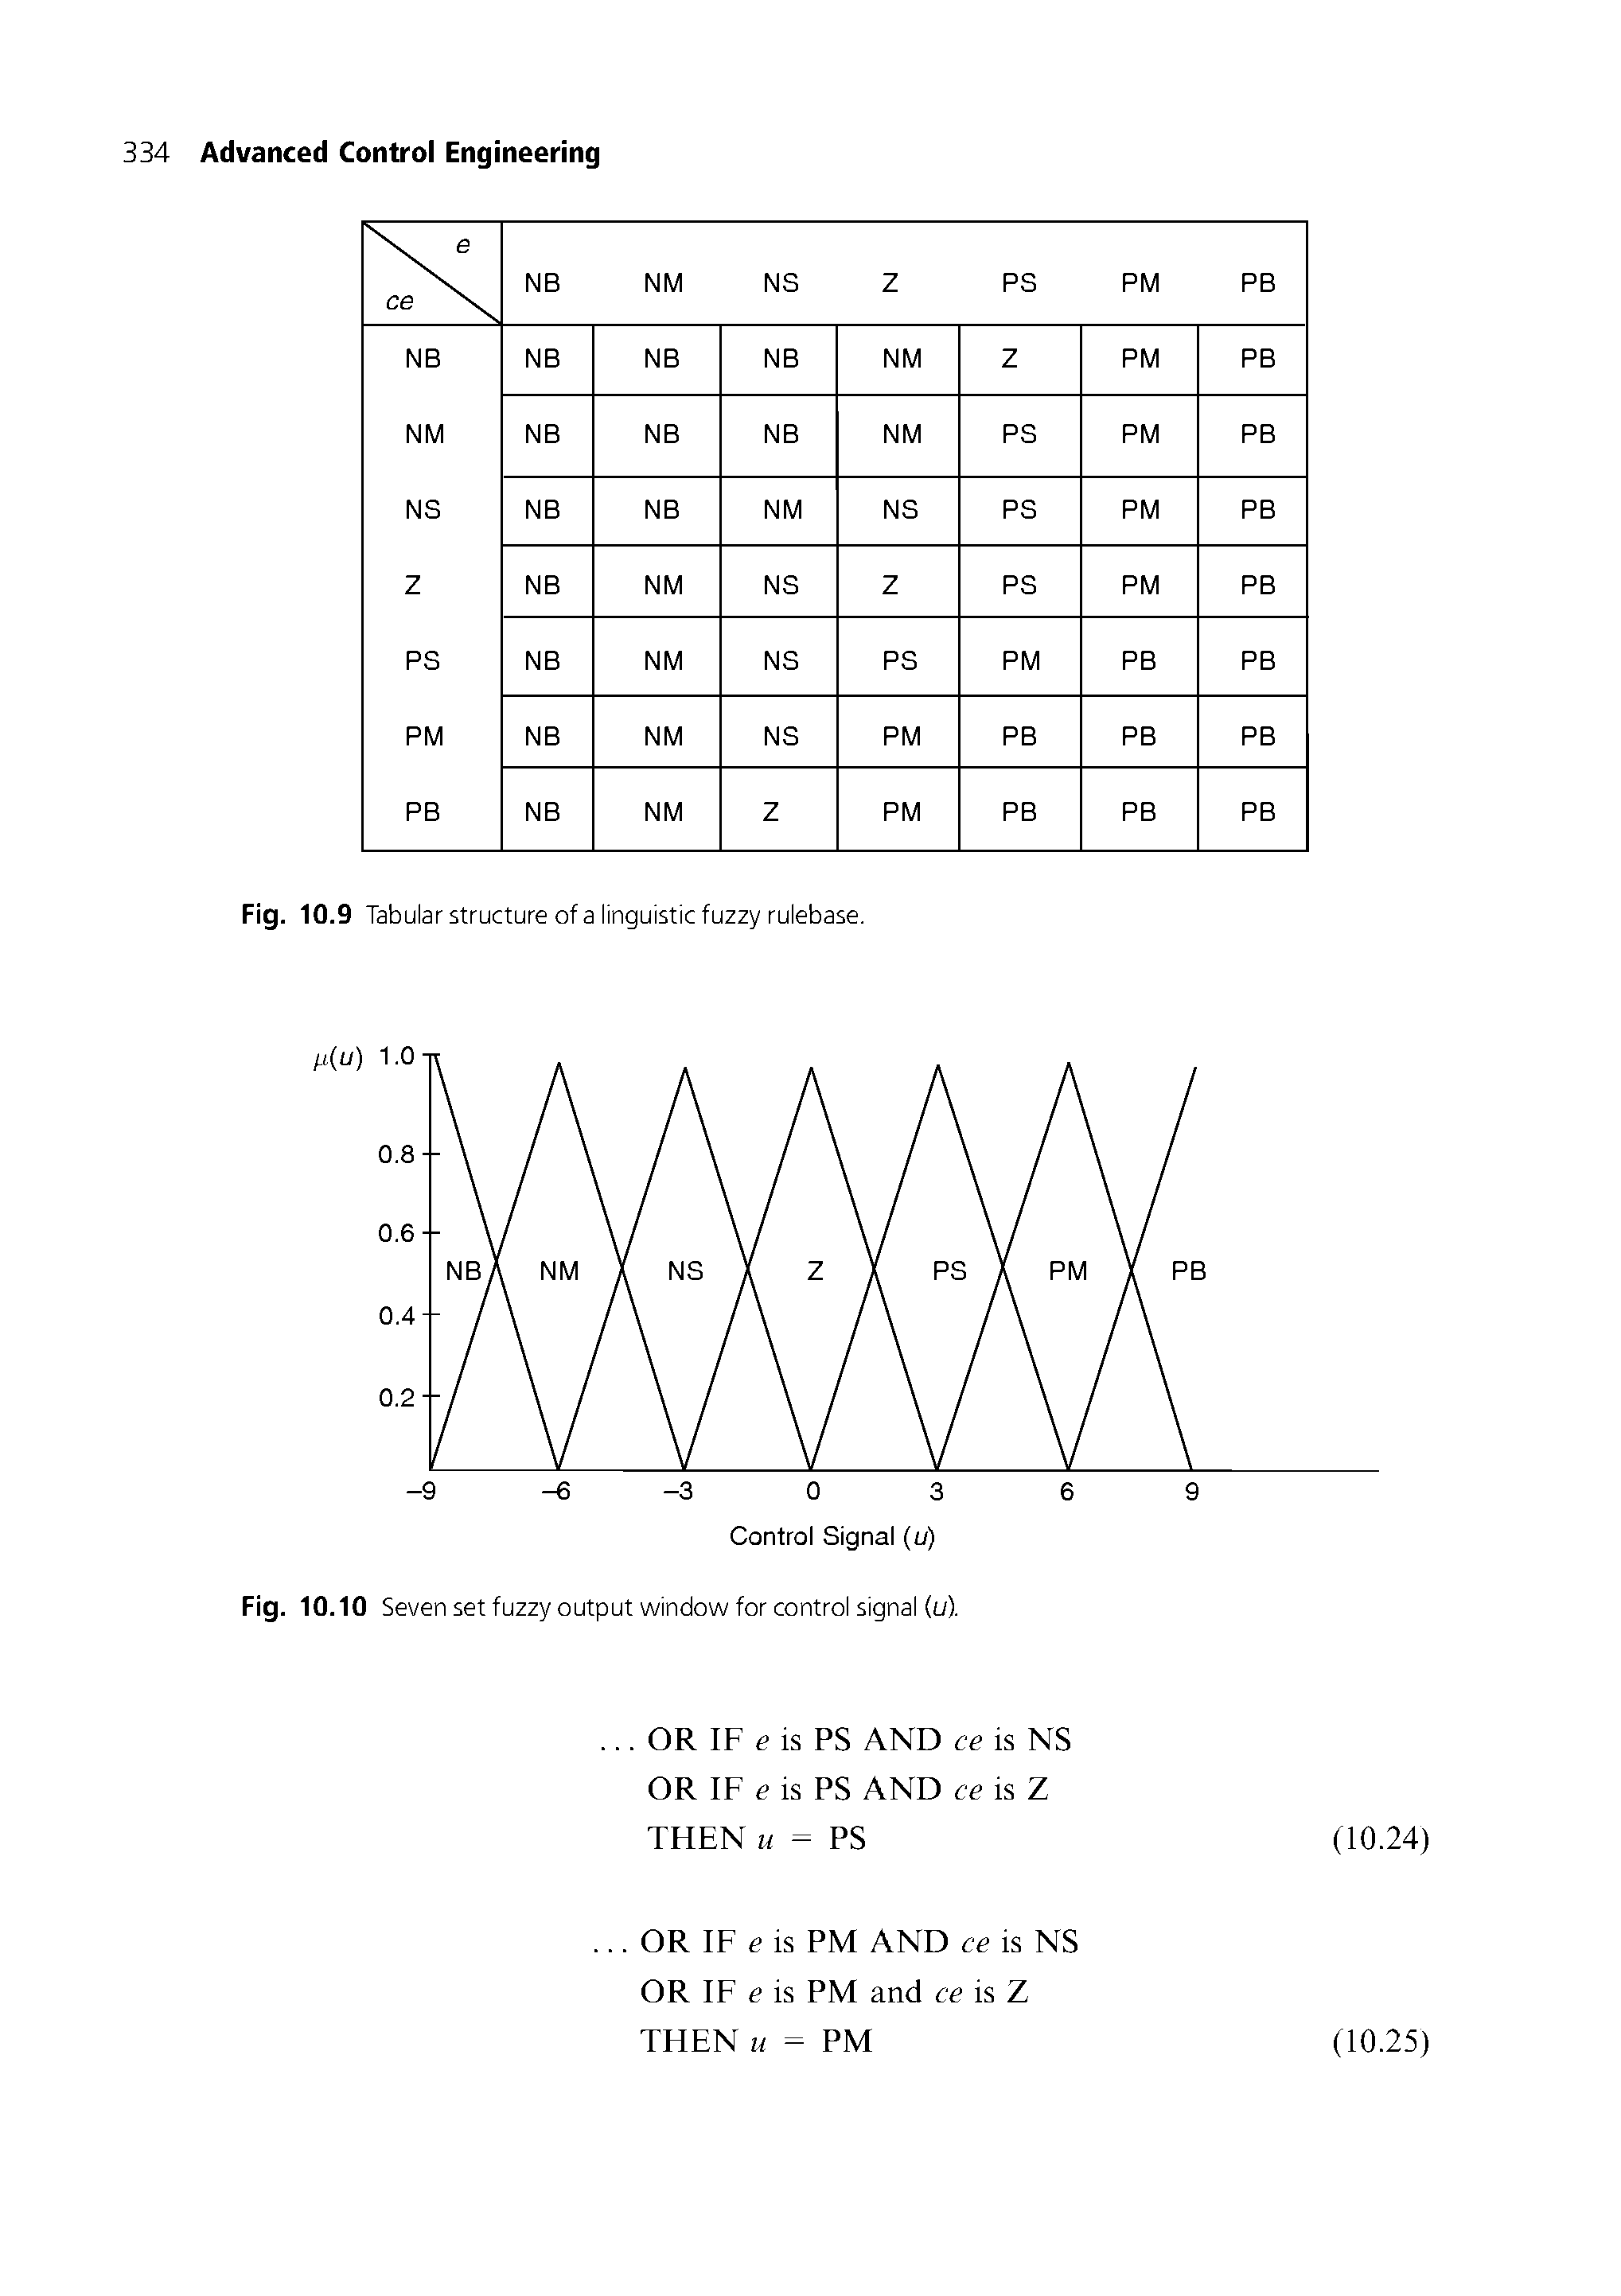 Fig. 10.10 Seven set fuzzy output window for control signal (u).